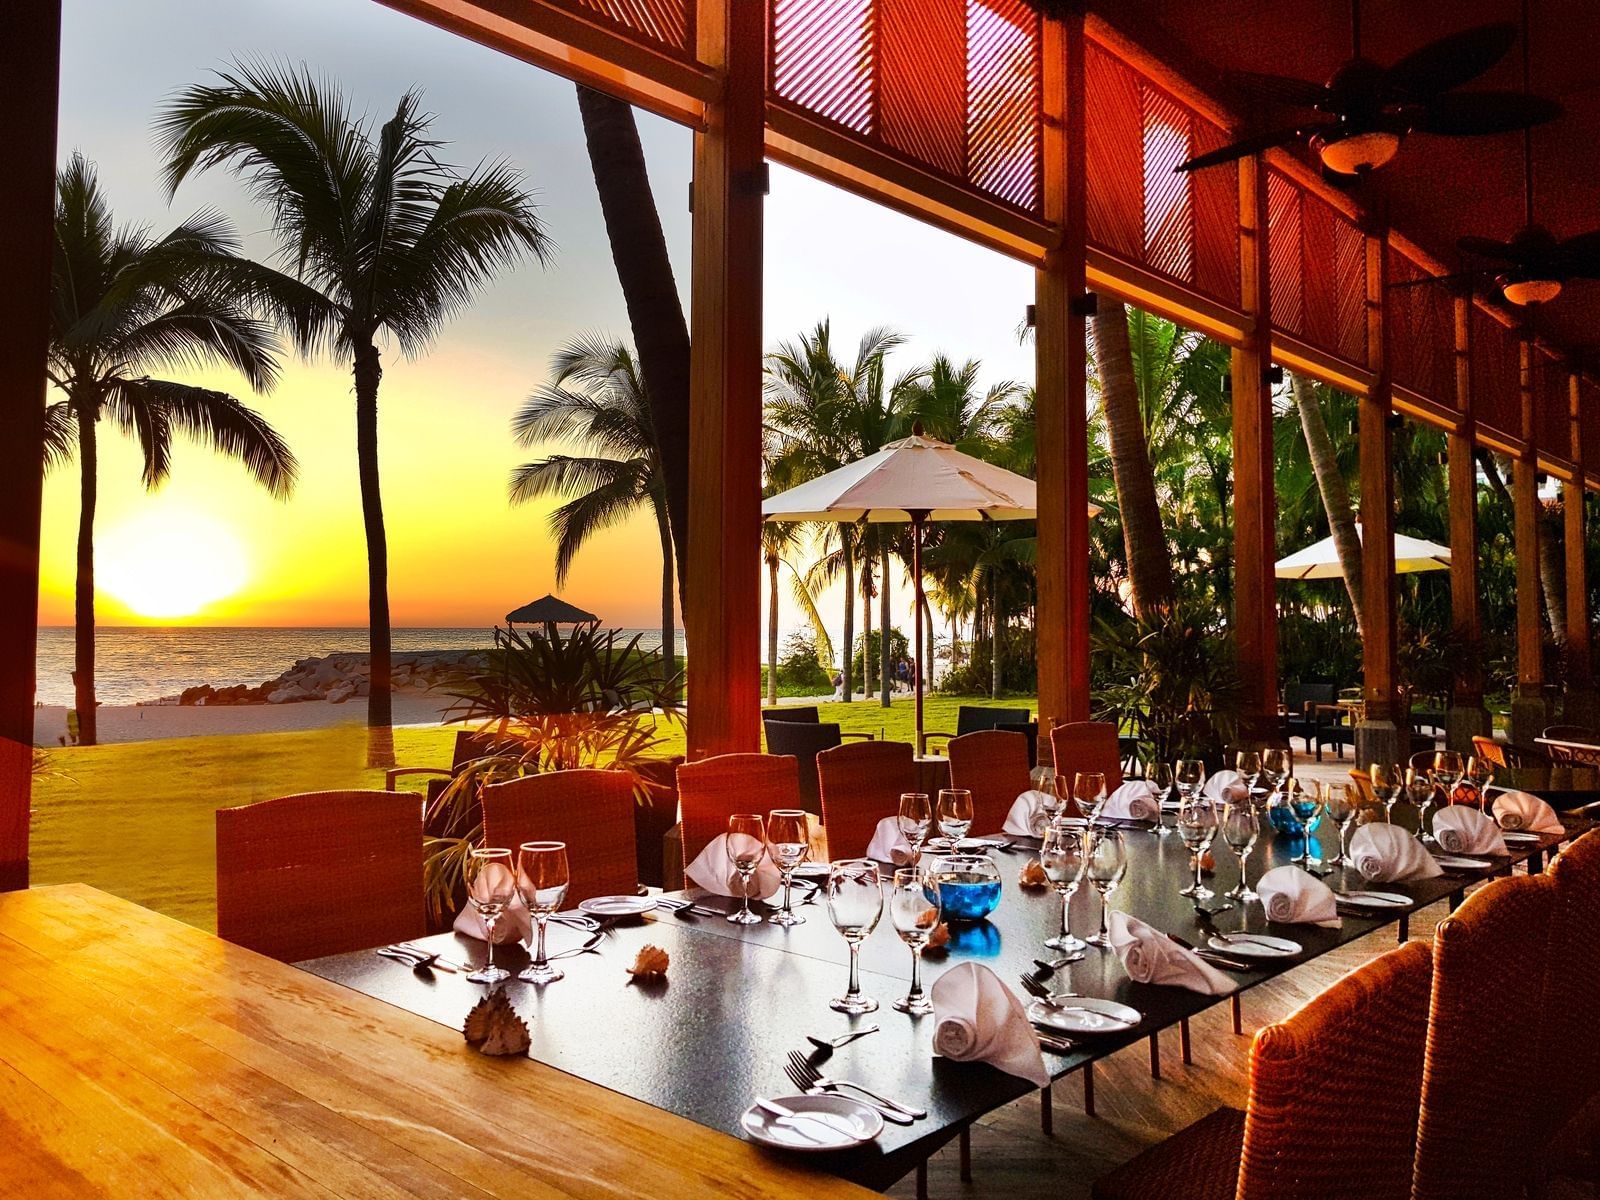 Veranda dining area at sunset at La Colección Resorts